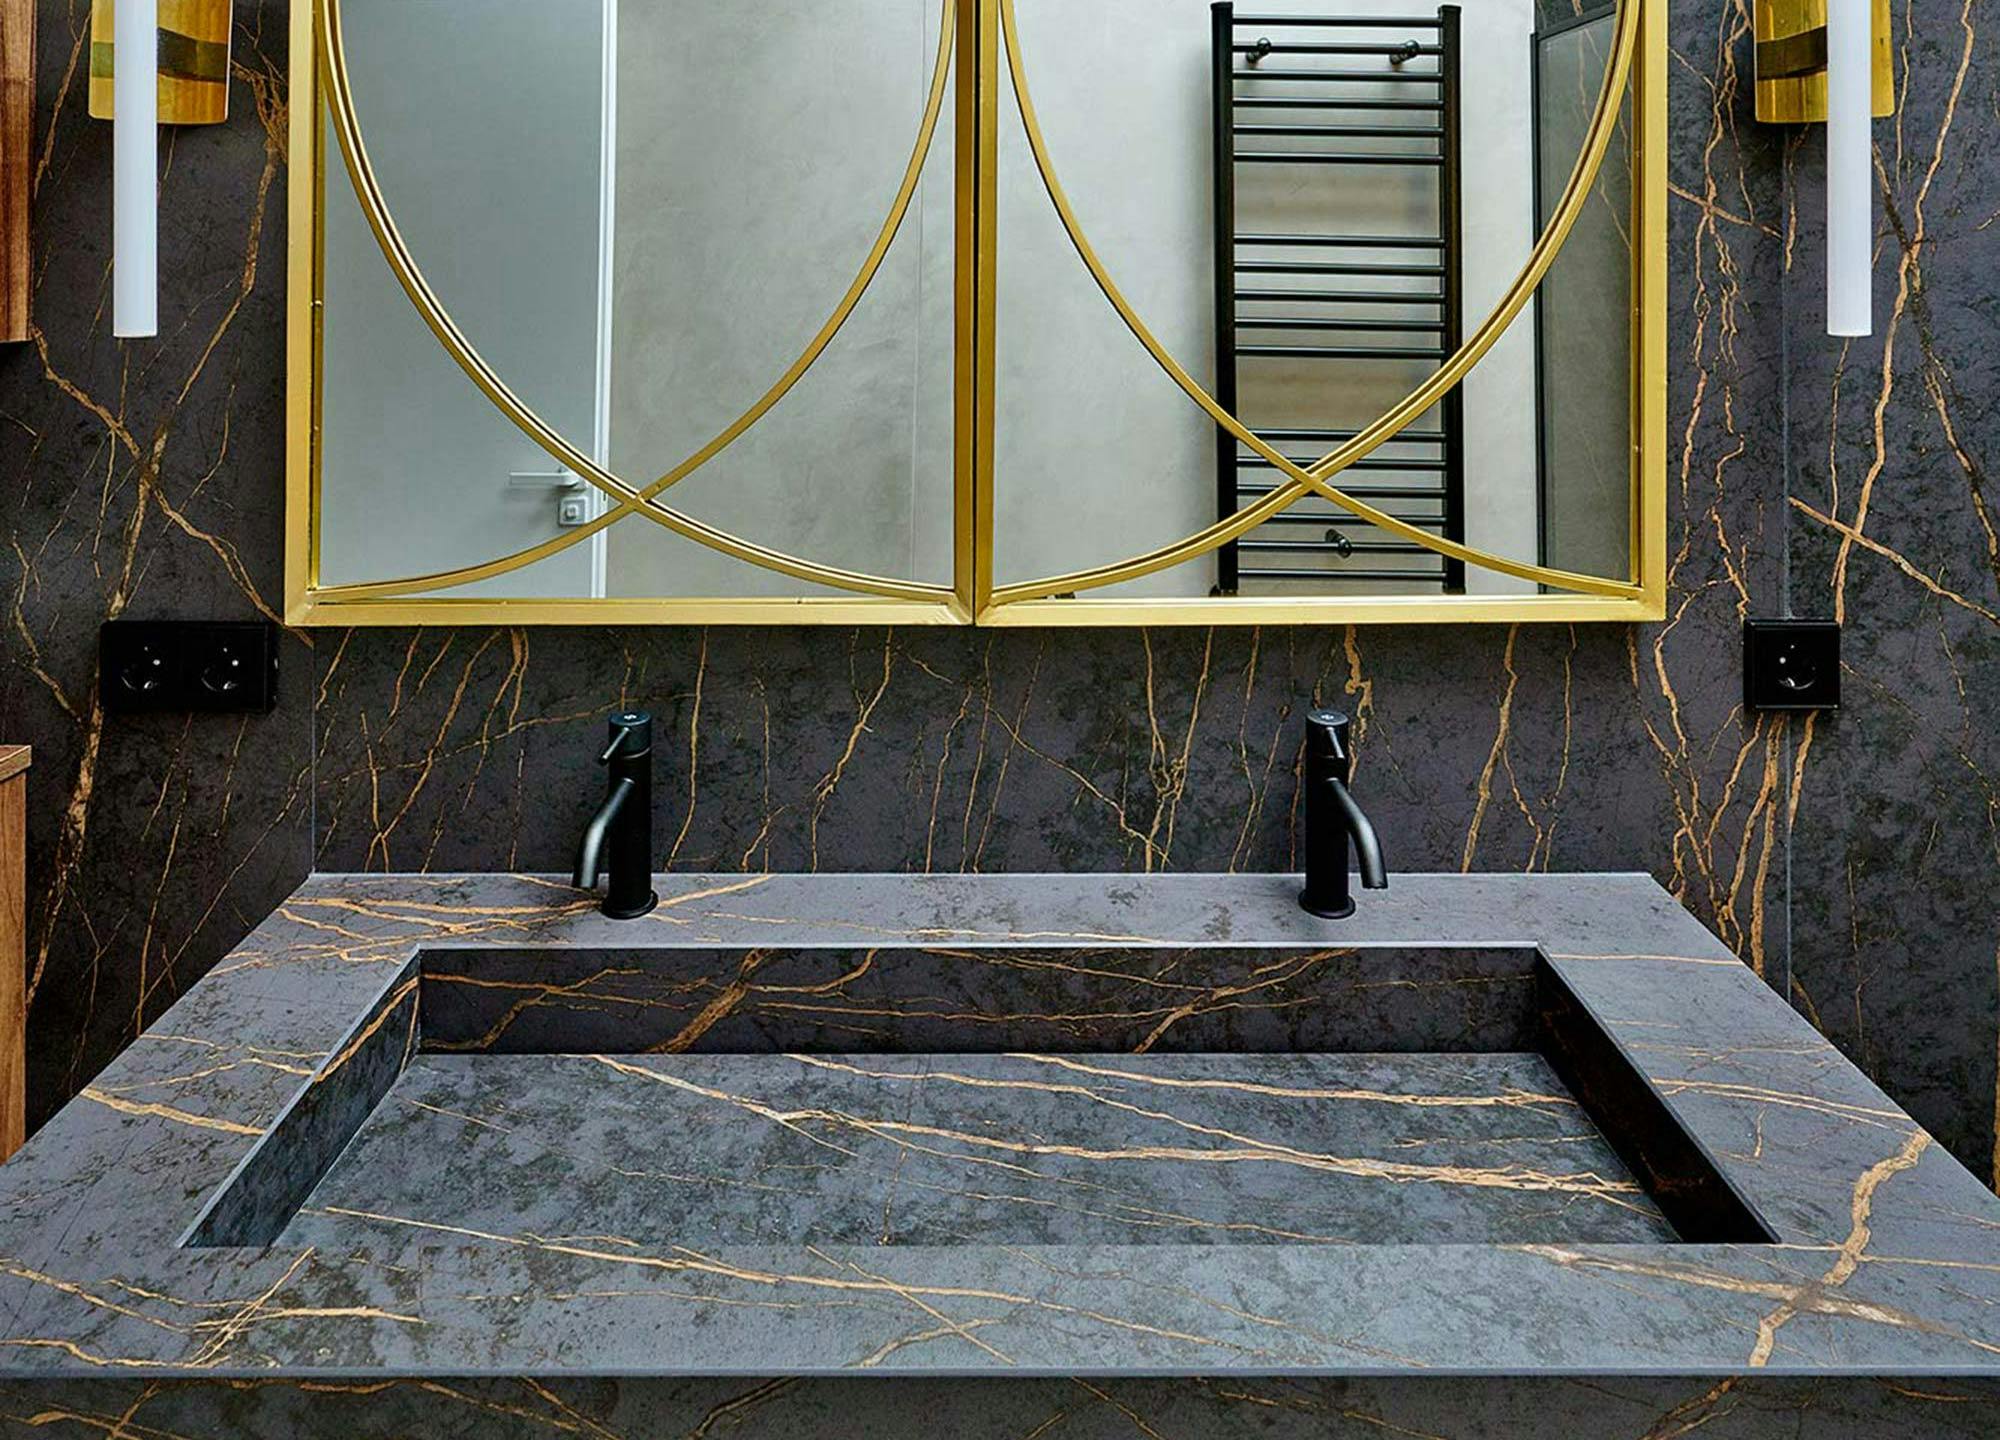 Imagem número 37 da actual secção de Two full-fledged bathrooms covered by Dekton at Ben Adams da Cosentino Portugal